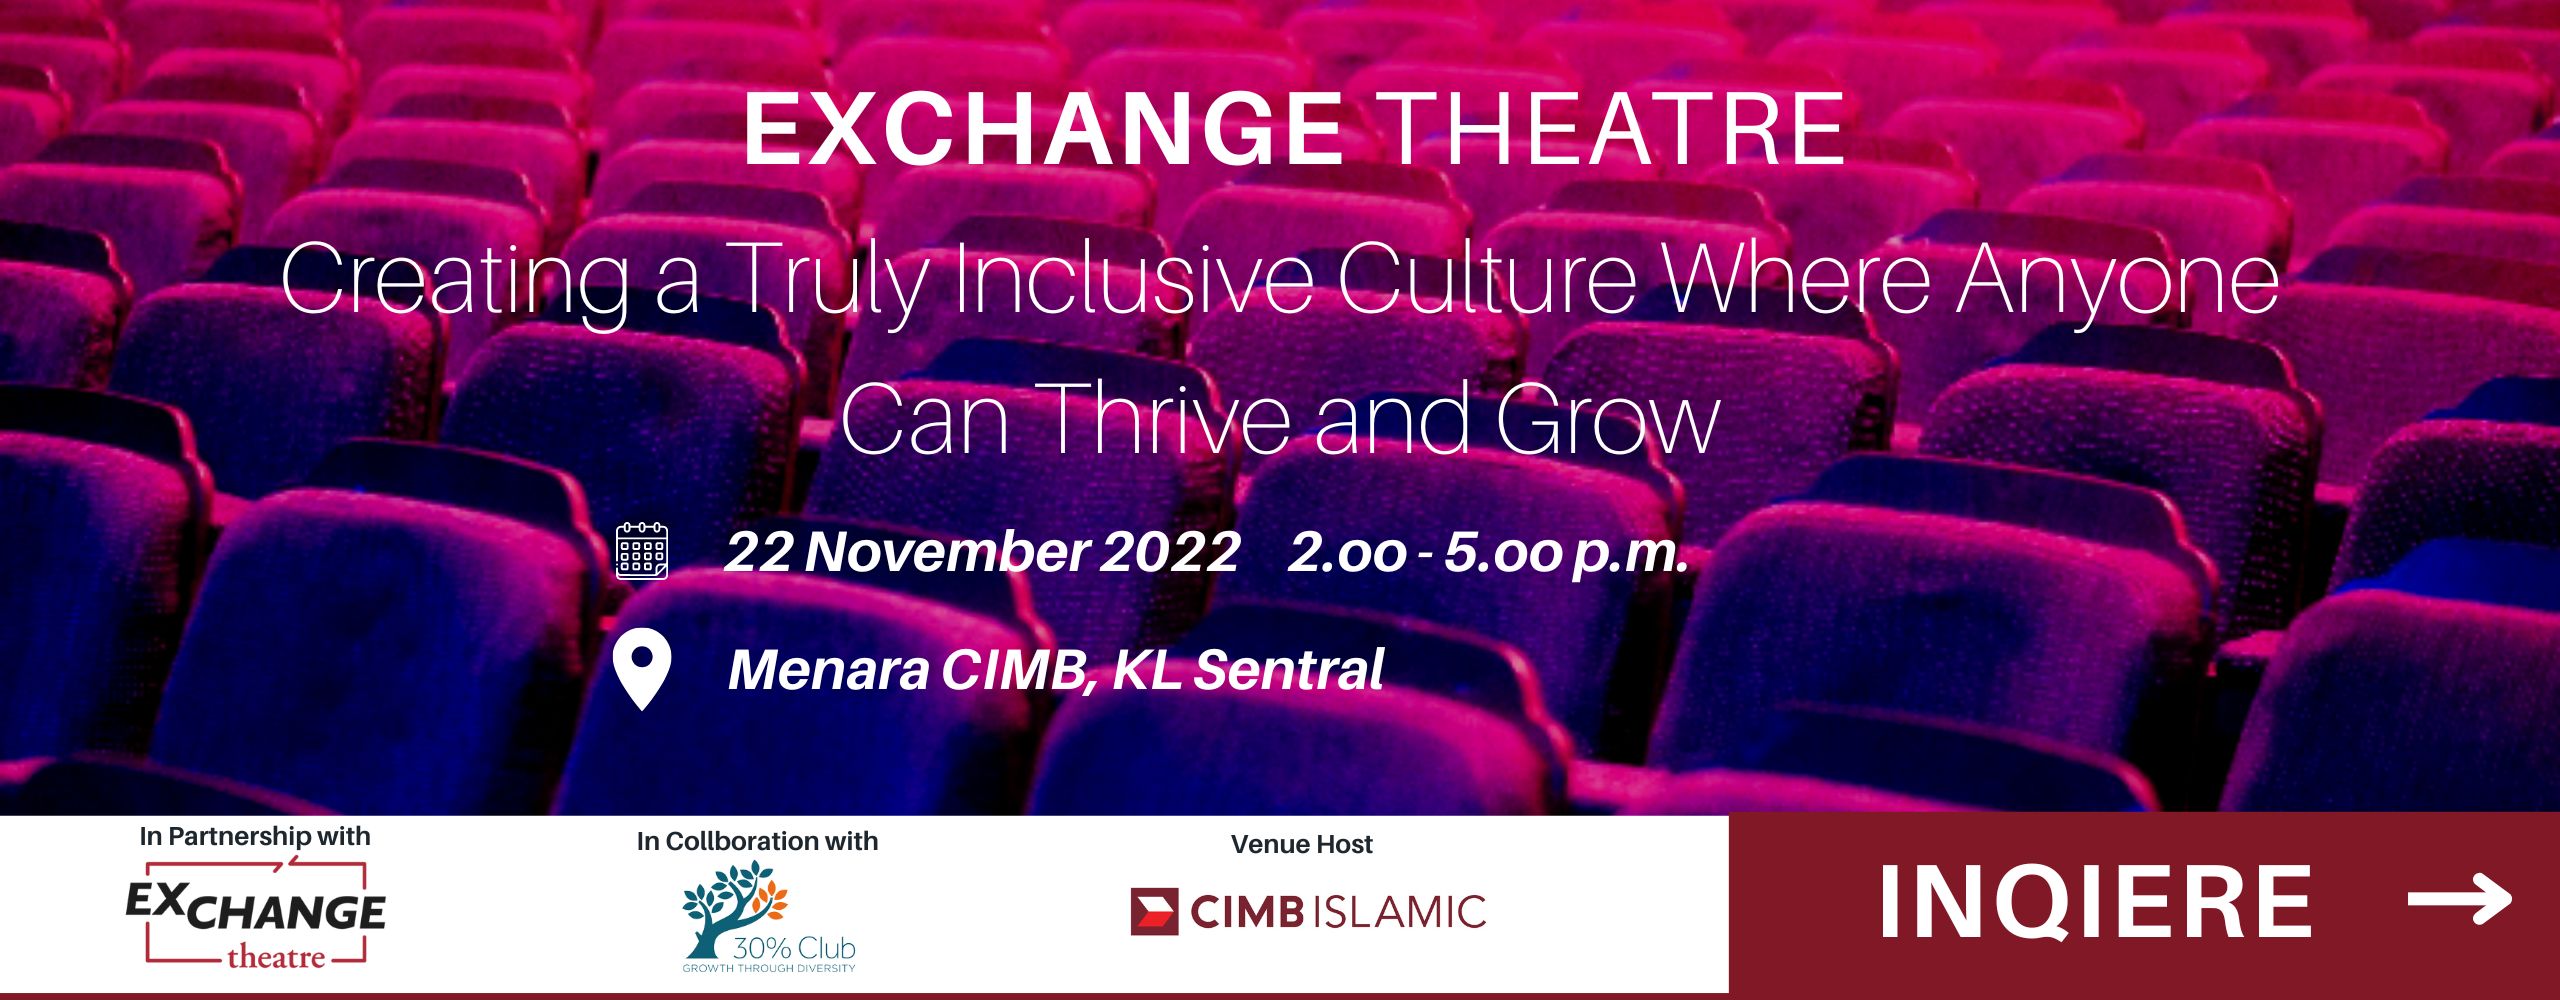 Exchange Theatre on 22 Nov 2022 @ Menara CIMB, KL Sentral